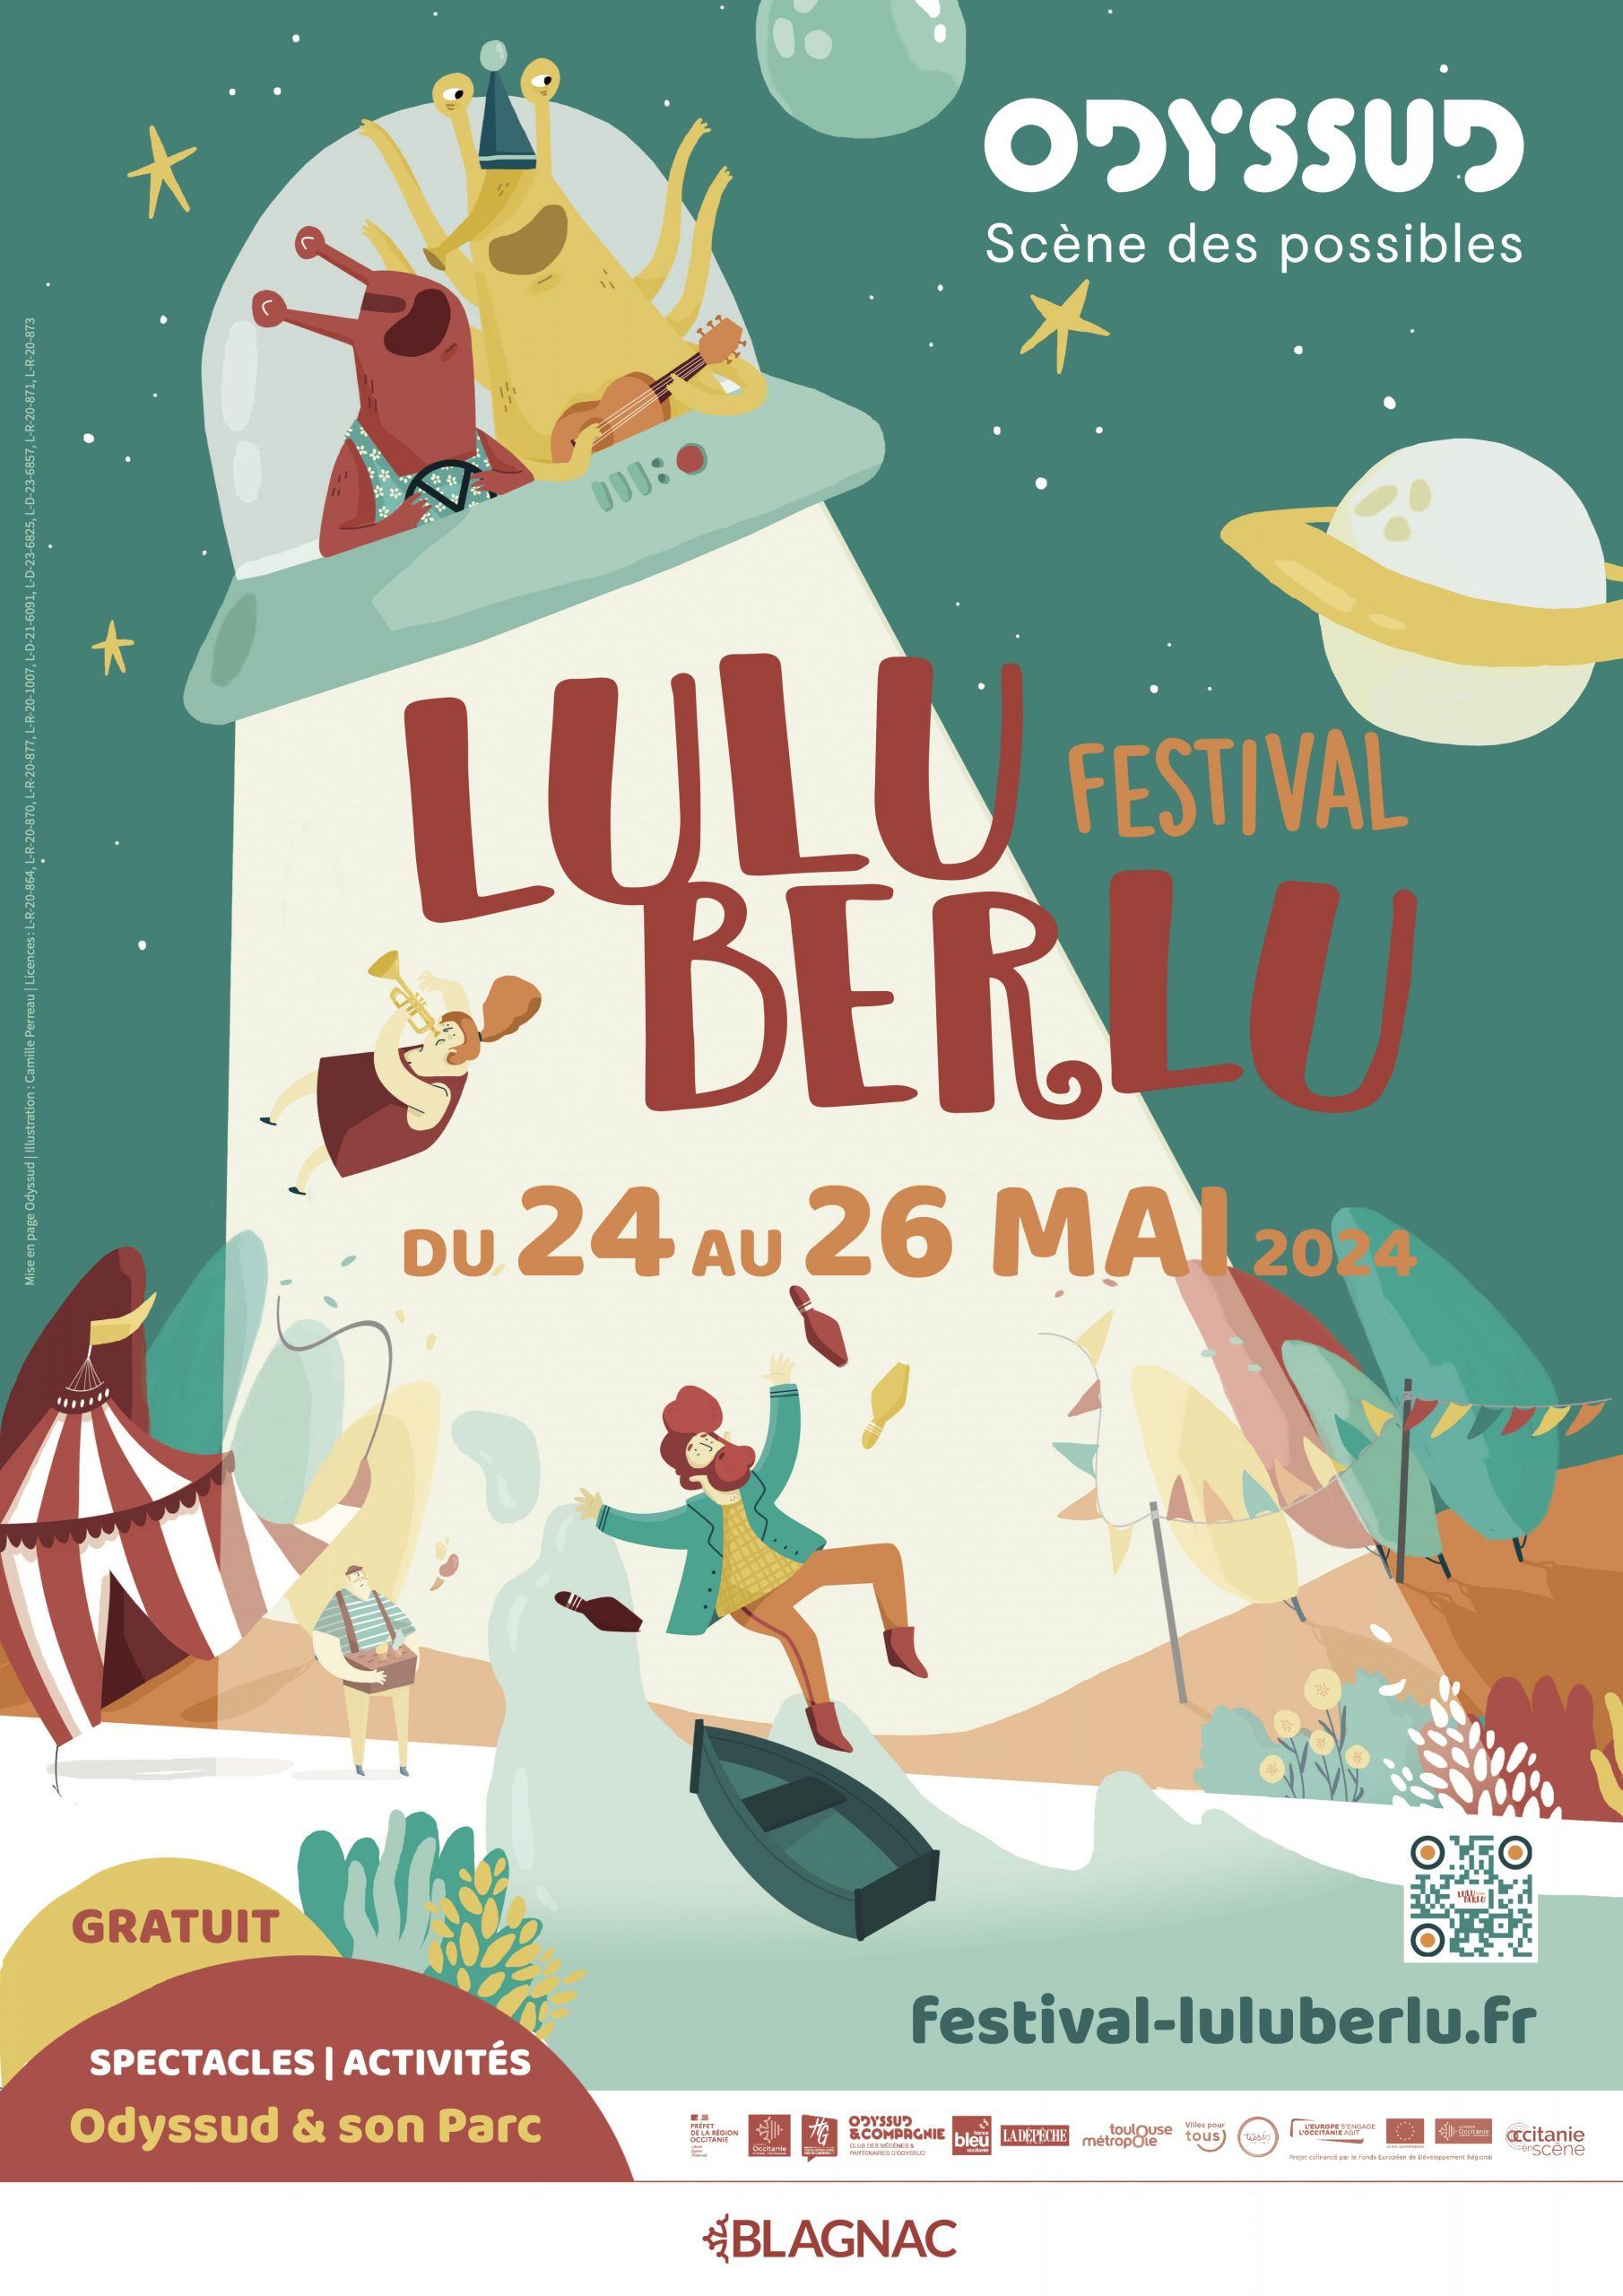 Odyssud - Festival Luluberlu